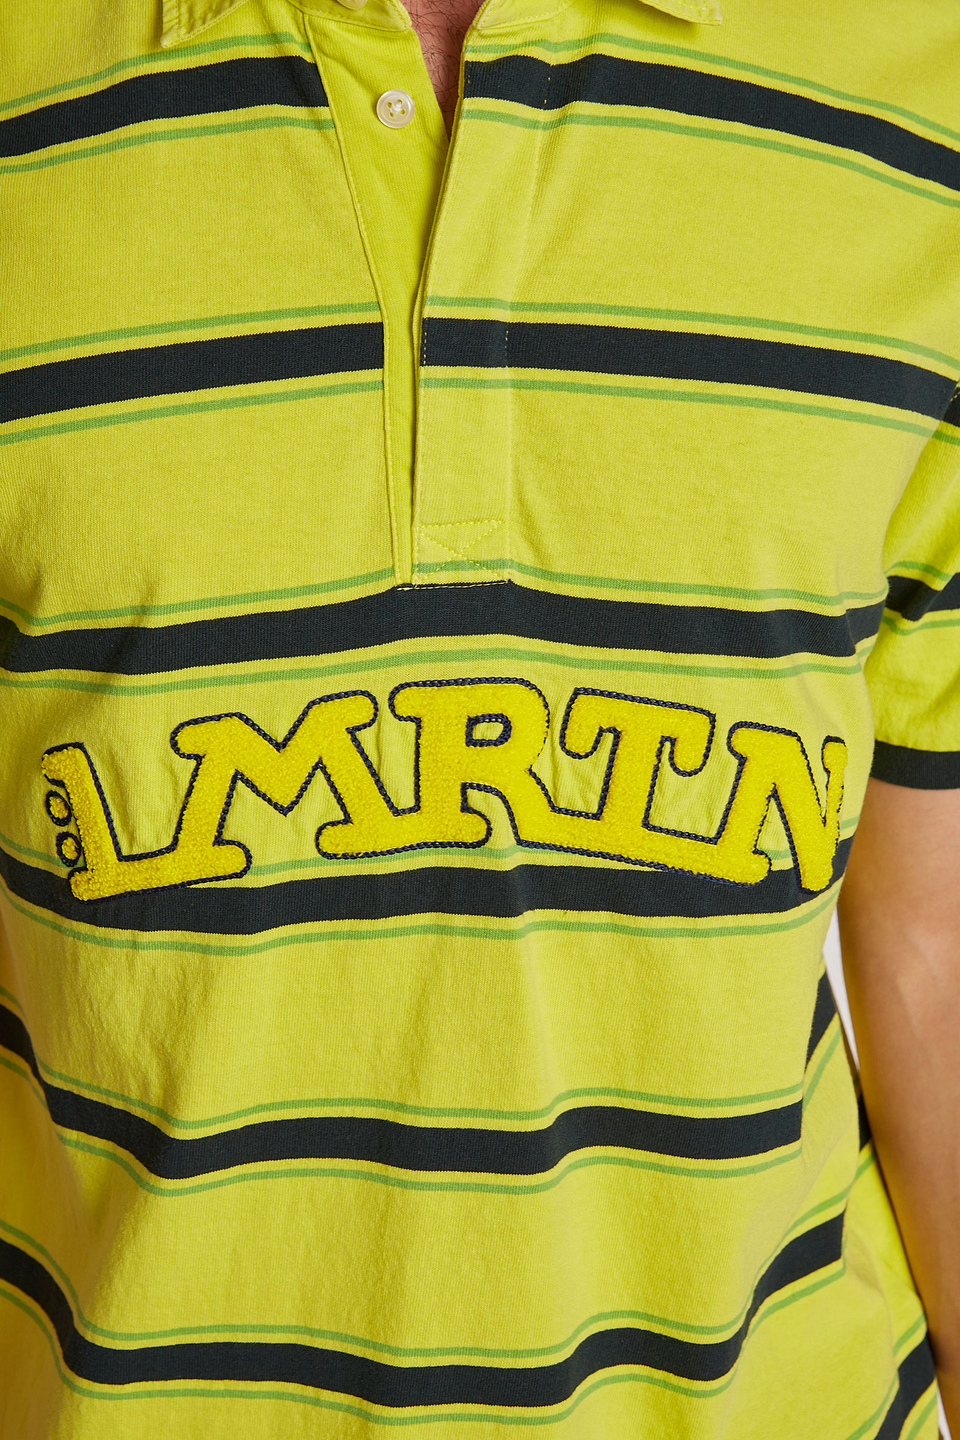 Herren-Poloshirt mit kurzem Arm aus 100 % Baumwolle, oversized Modell - La Martina - Official Online Shop